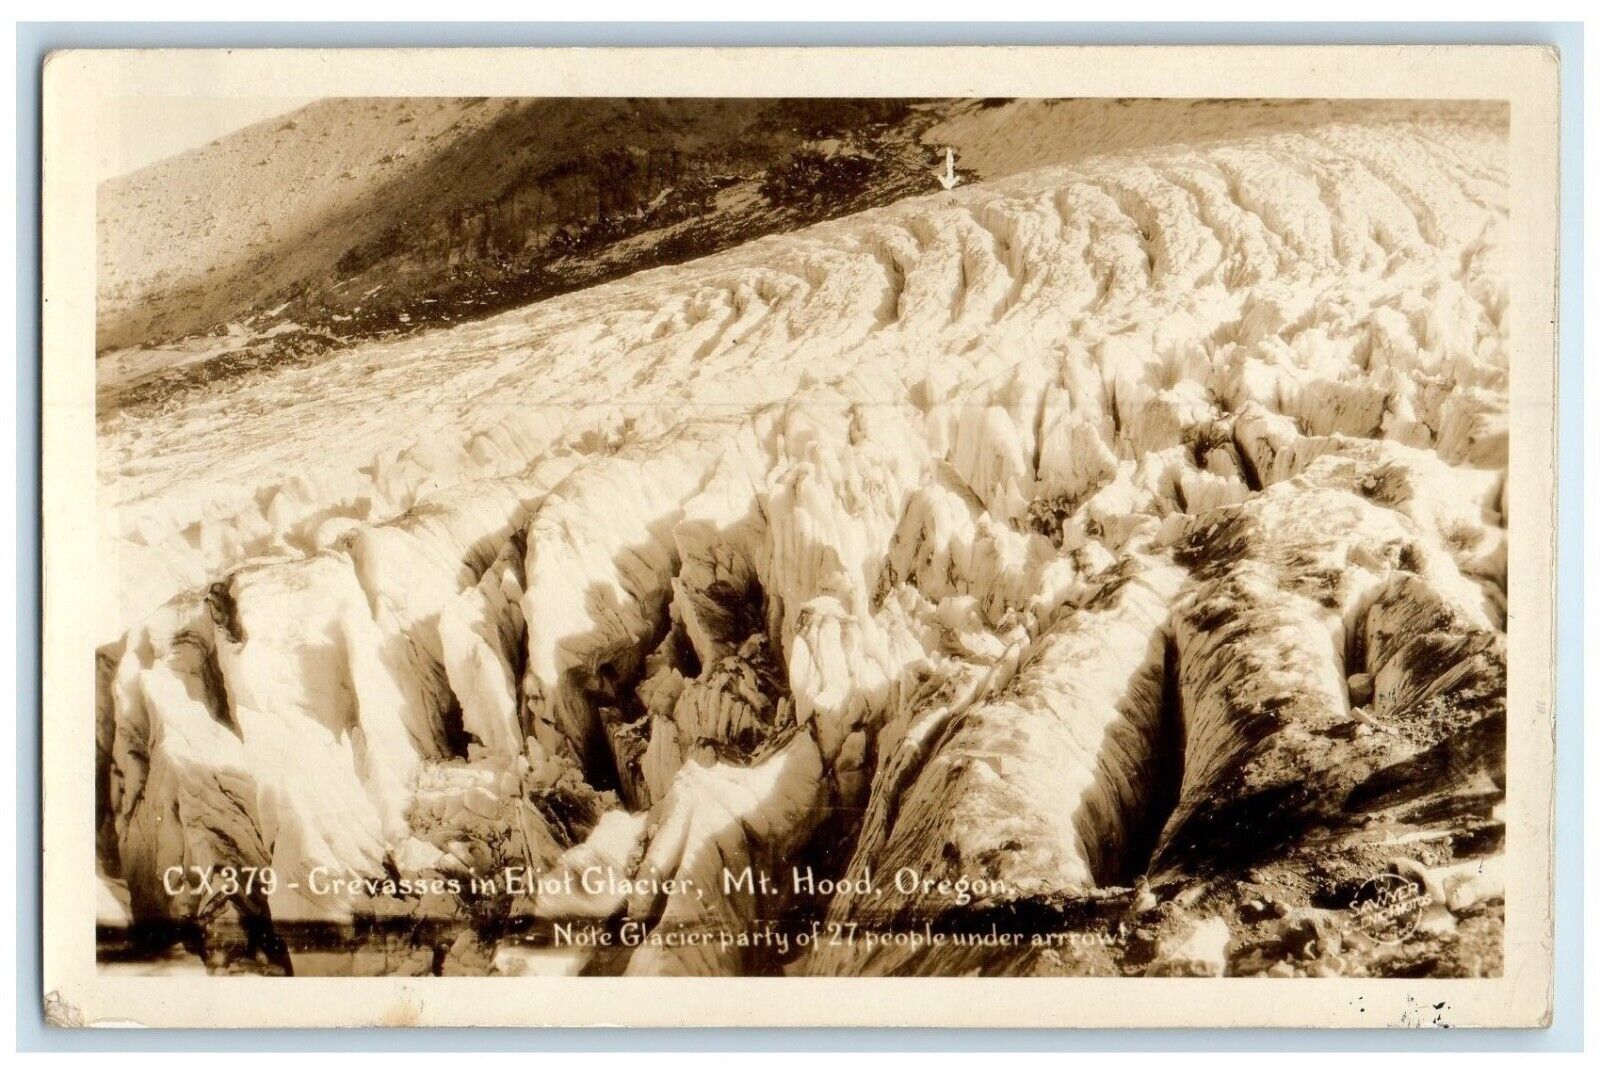 1934 Crevasses In Eliot Glacier Mt. Hood Government Camp OR RPPC Photo Postcard